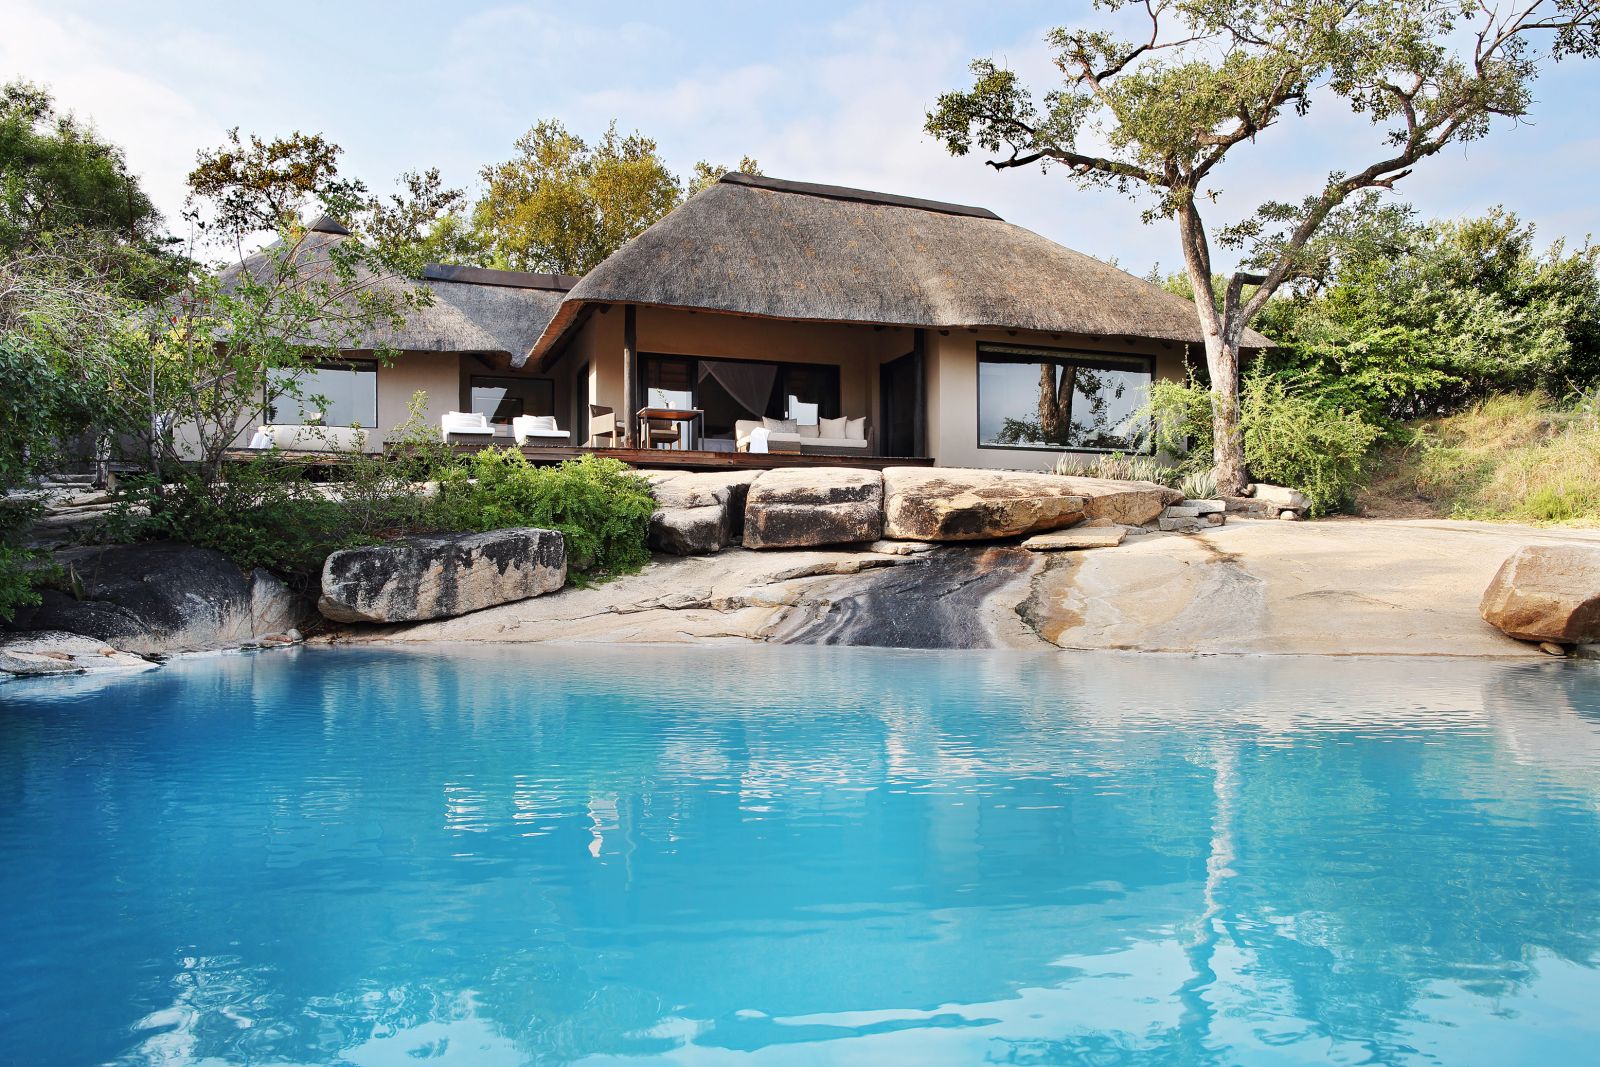 Pool at Londolozi Granite Suites in South Africa